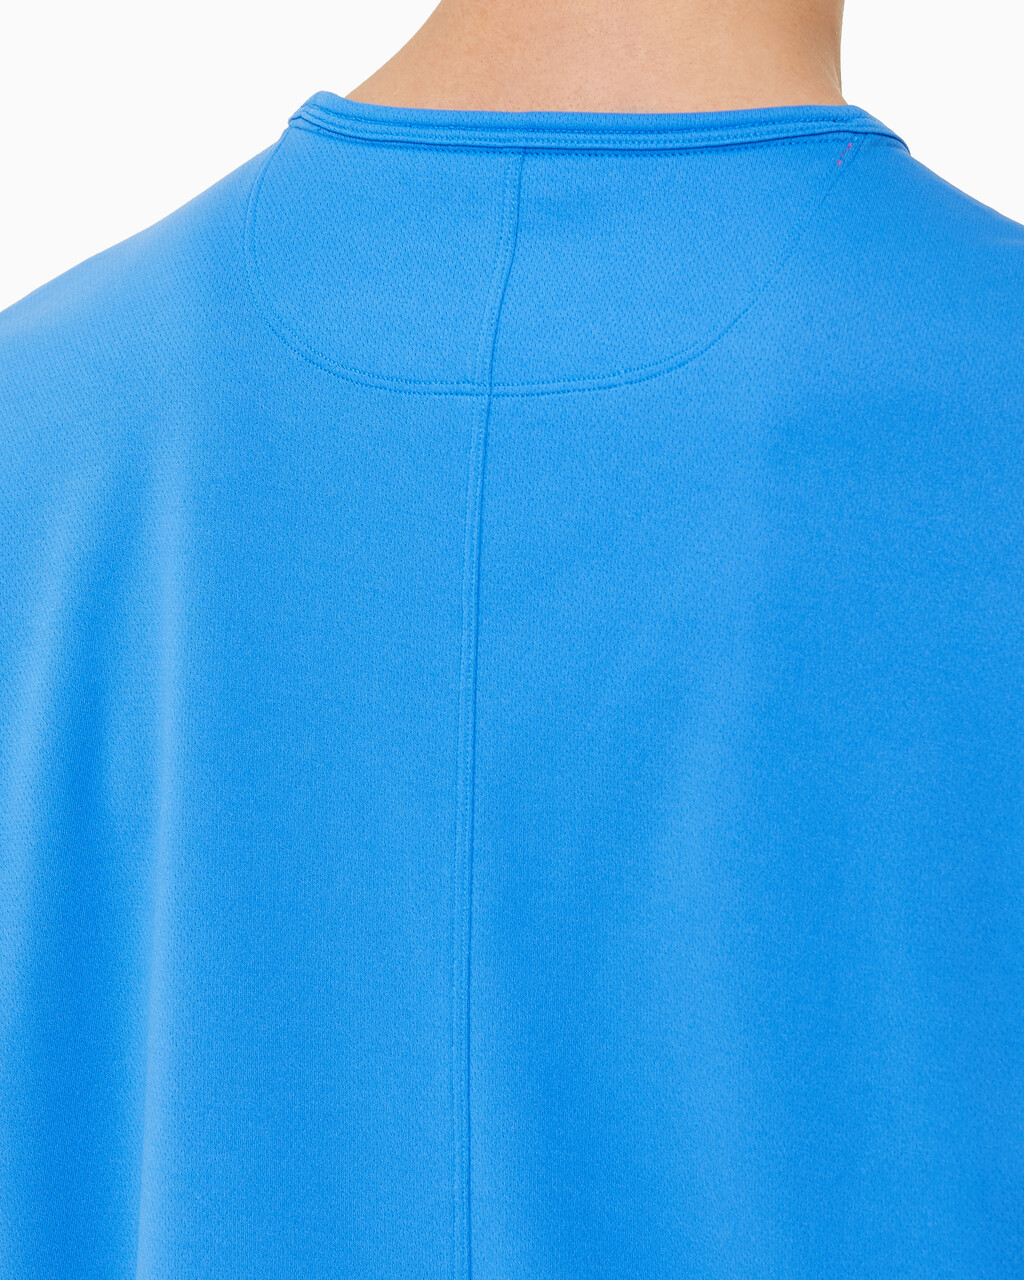 Buy 남성 레귤러 핏 에센셜 스트레치 기능성 반팔 티셔츠 in color PALACE BLUE